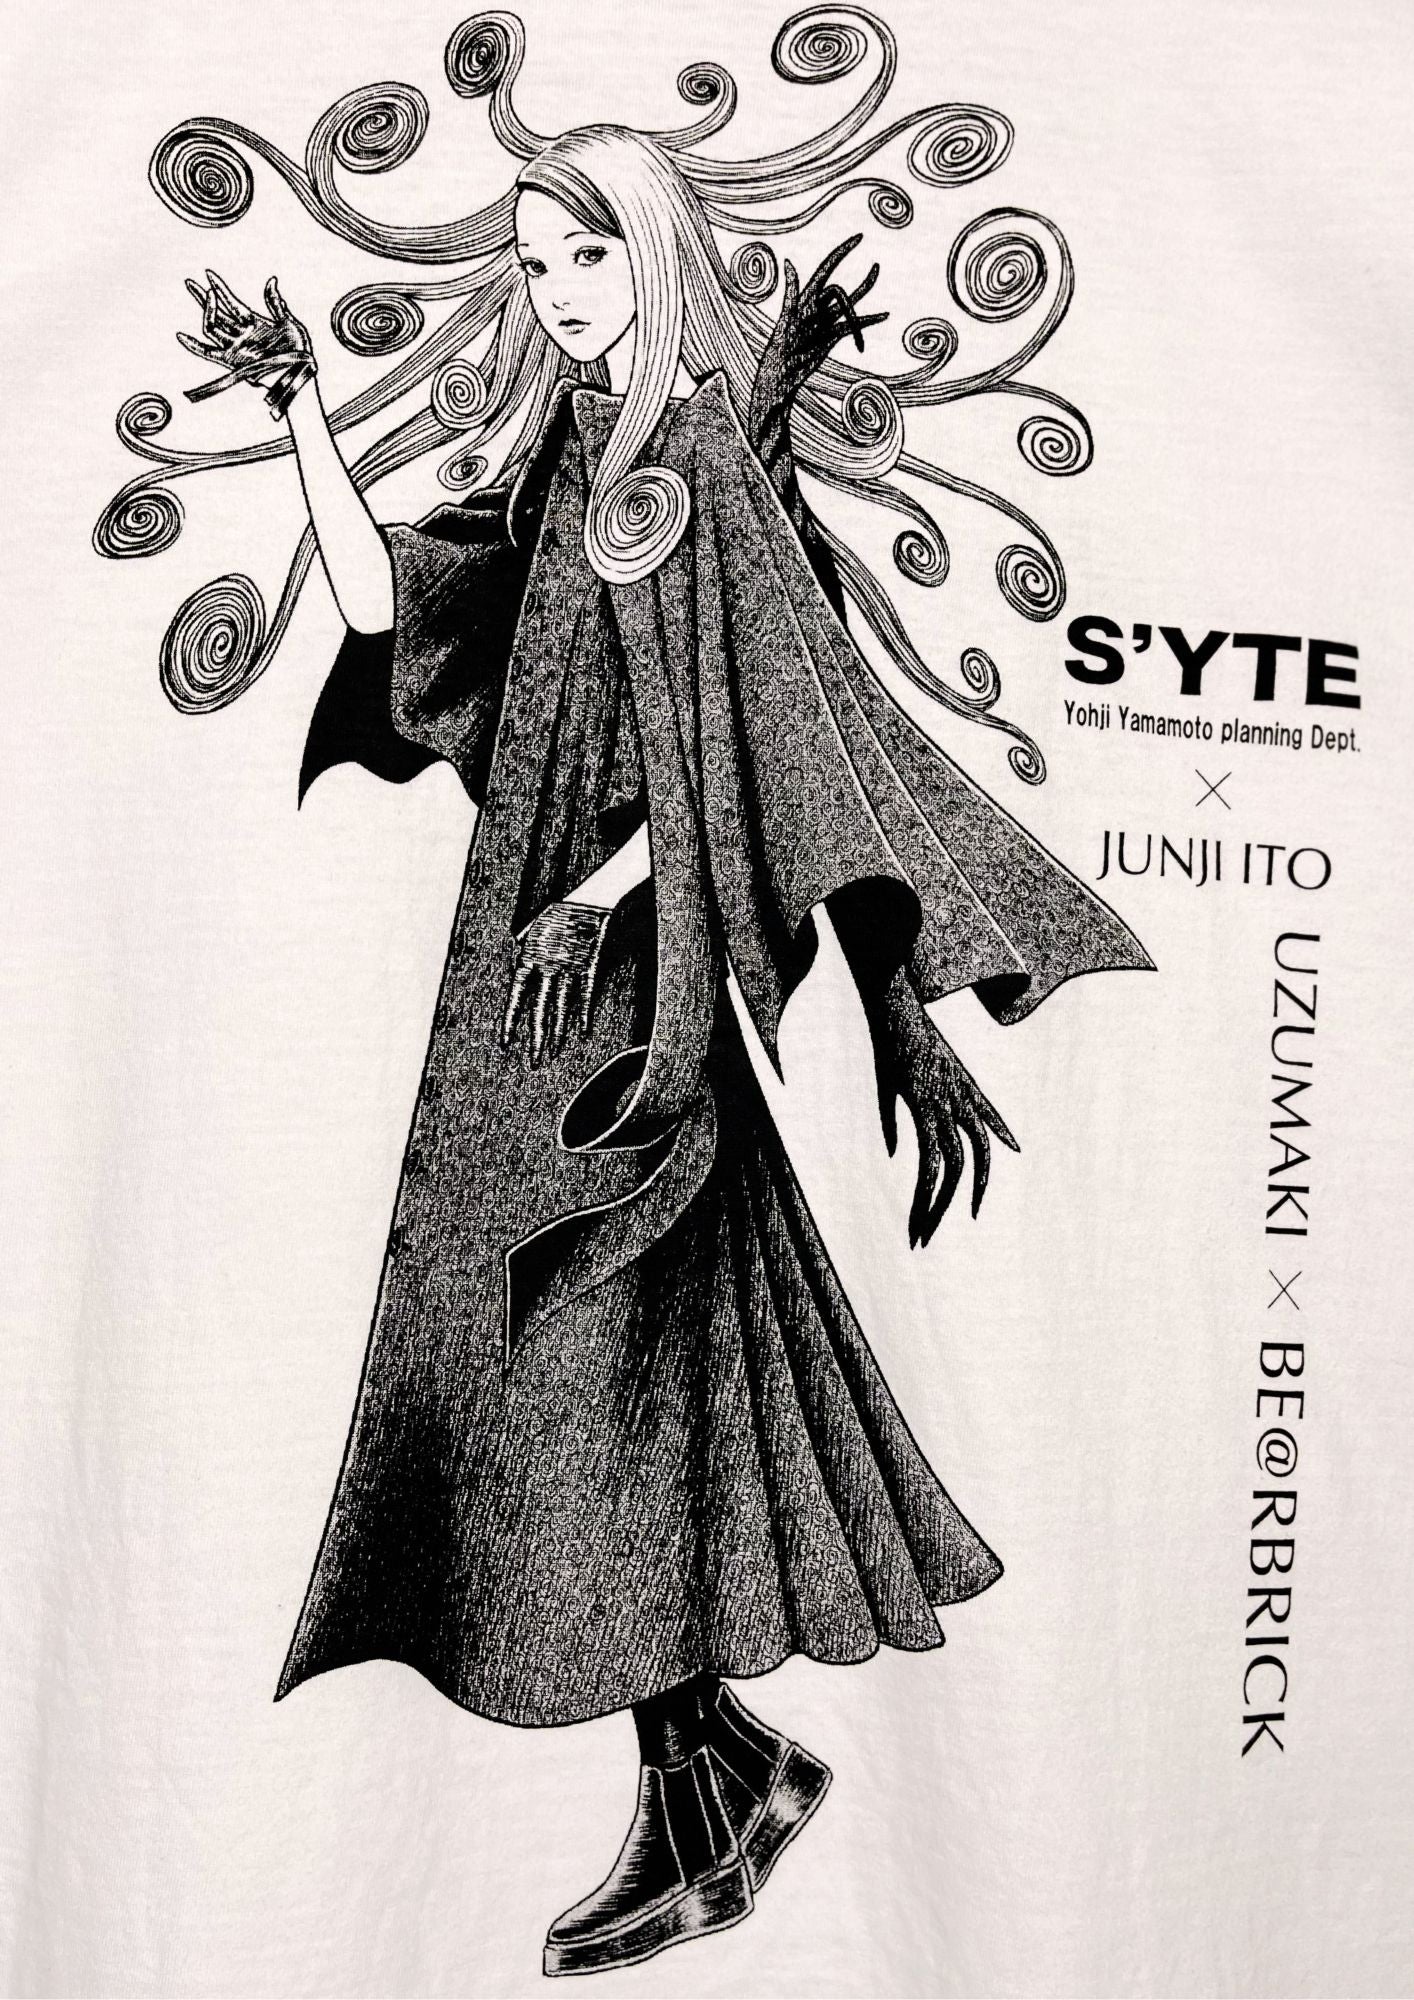 Junji Ito x S'YTE Yohji Yamamoto x BE@RBRICK Uzumaki T-shirt